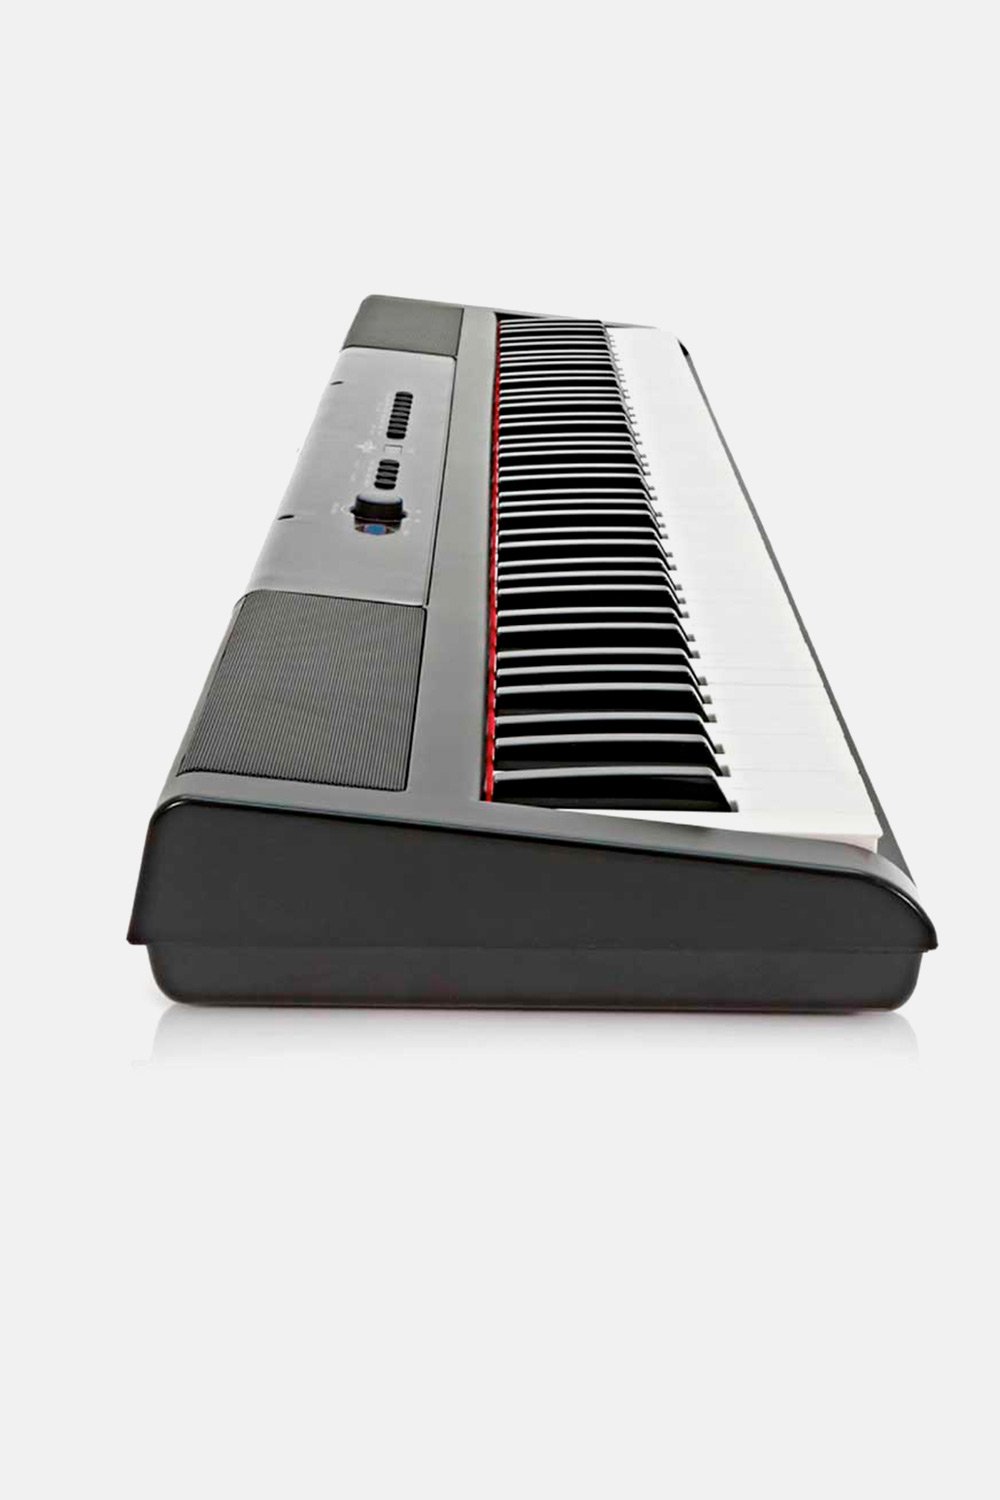 ARTESIA Performerbk Piano eléctrico 88 teclas semipesadas 12 voces  polifonía - $ 516.300 - House Music - Instrumentos Musicales - Audio  Profesional - Iluminacion